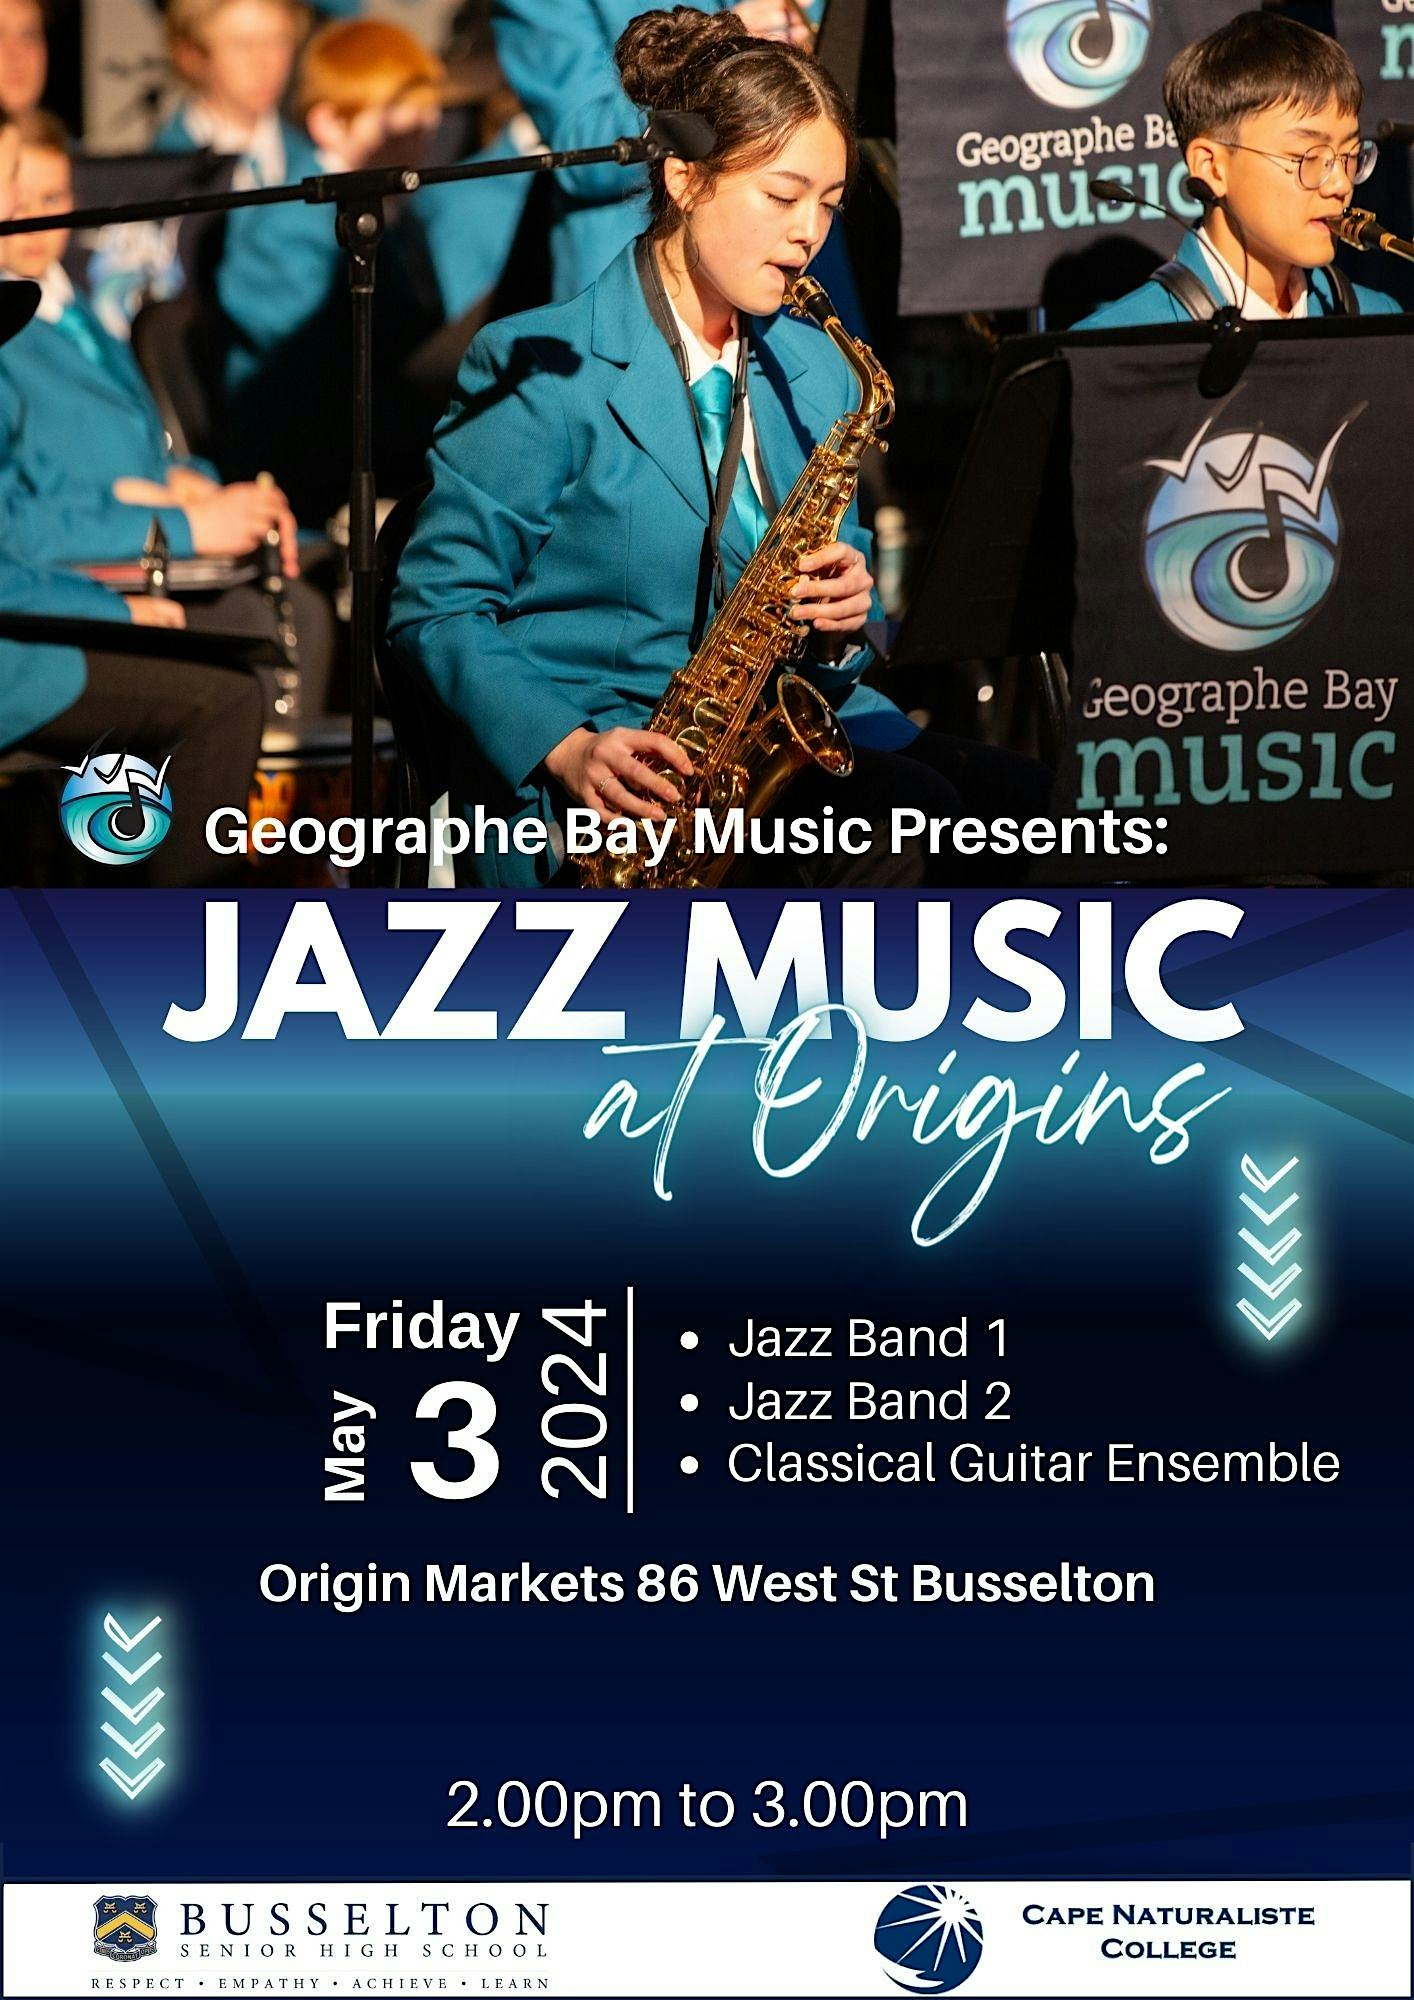 Geographe Bay Music presents: Jazz Music at Origins